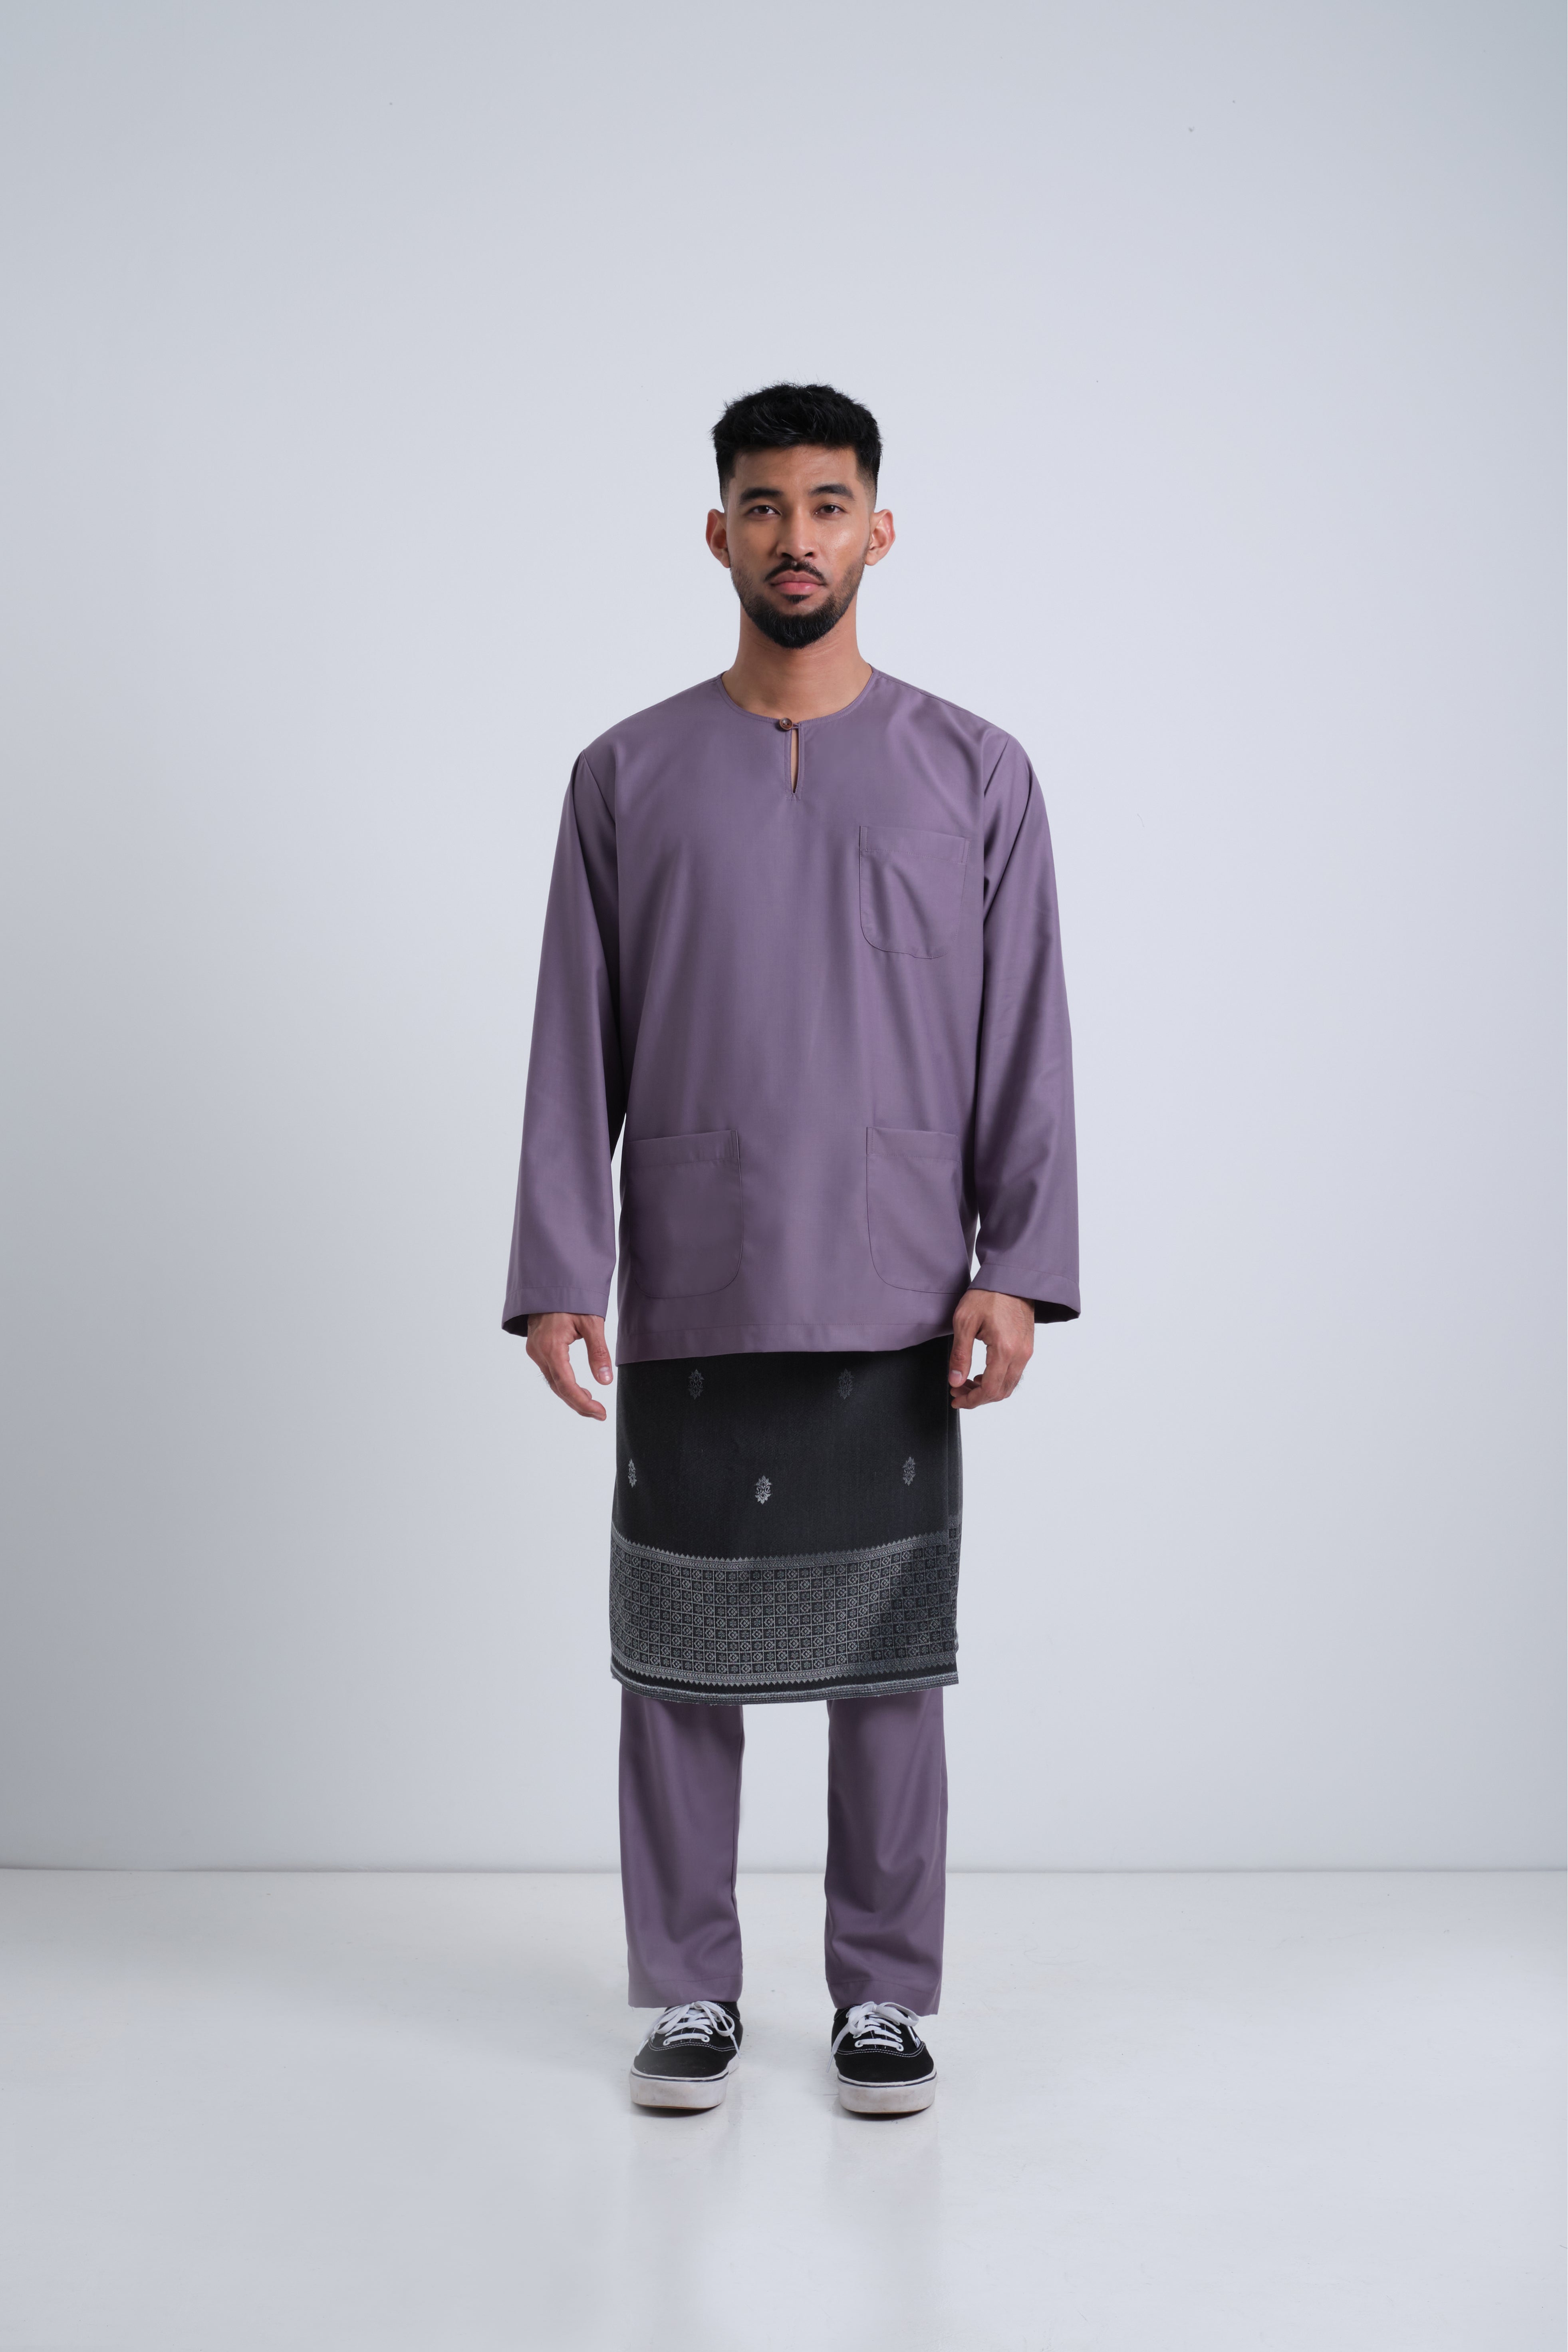 Patawali Classic Fit Baju Melayu Teluk Belanga - Dusty Lilac